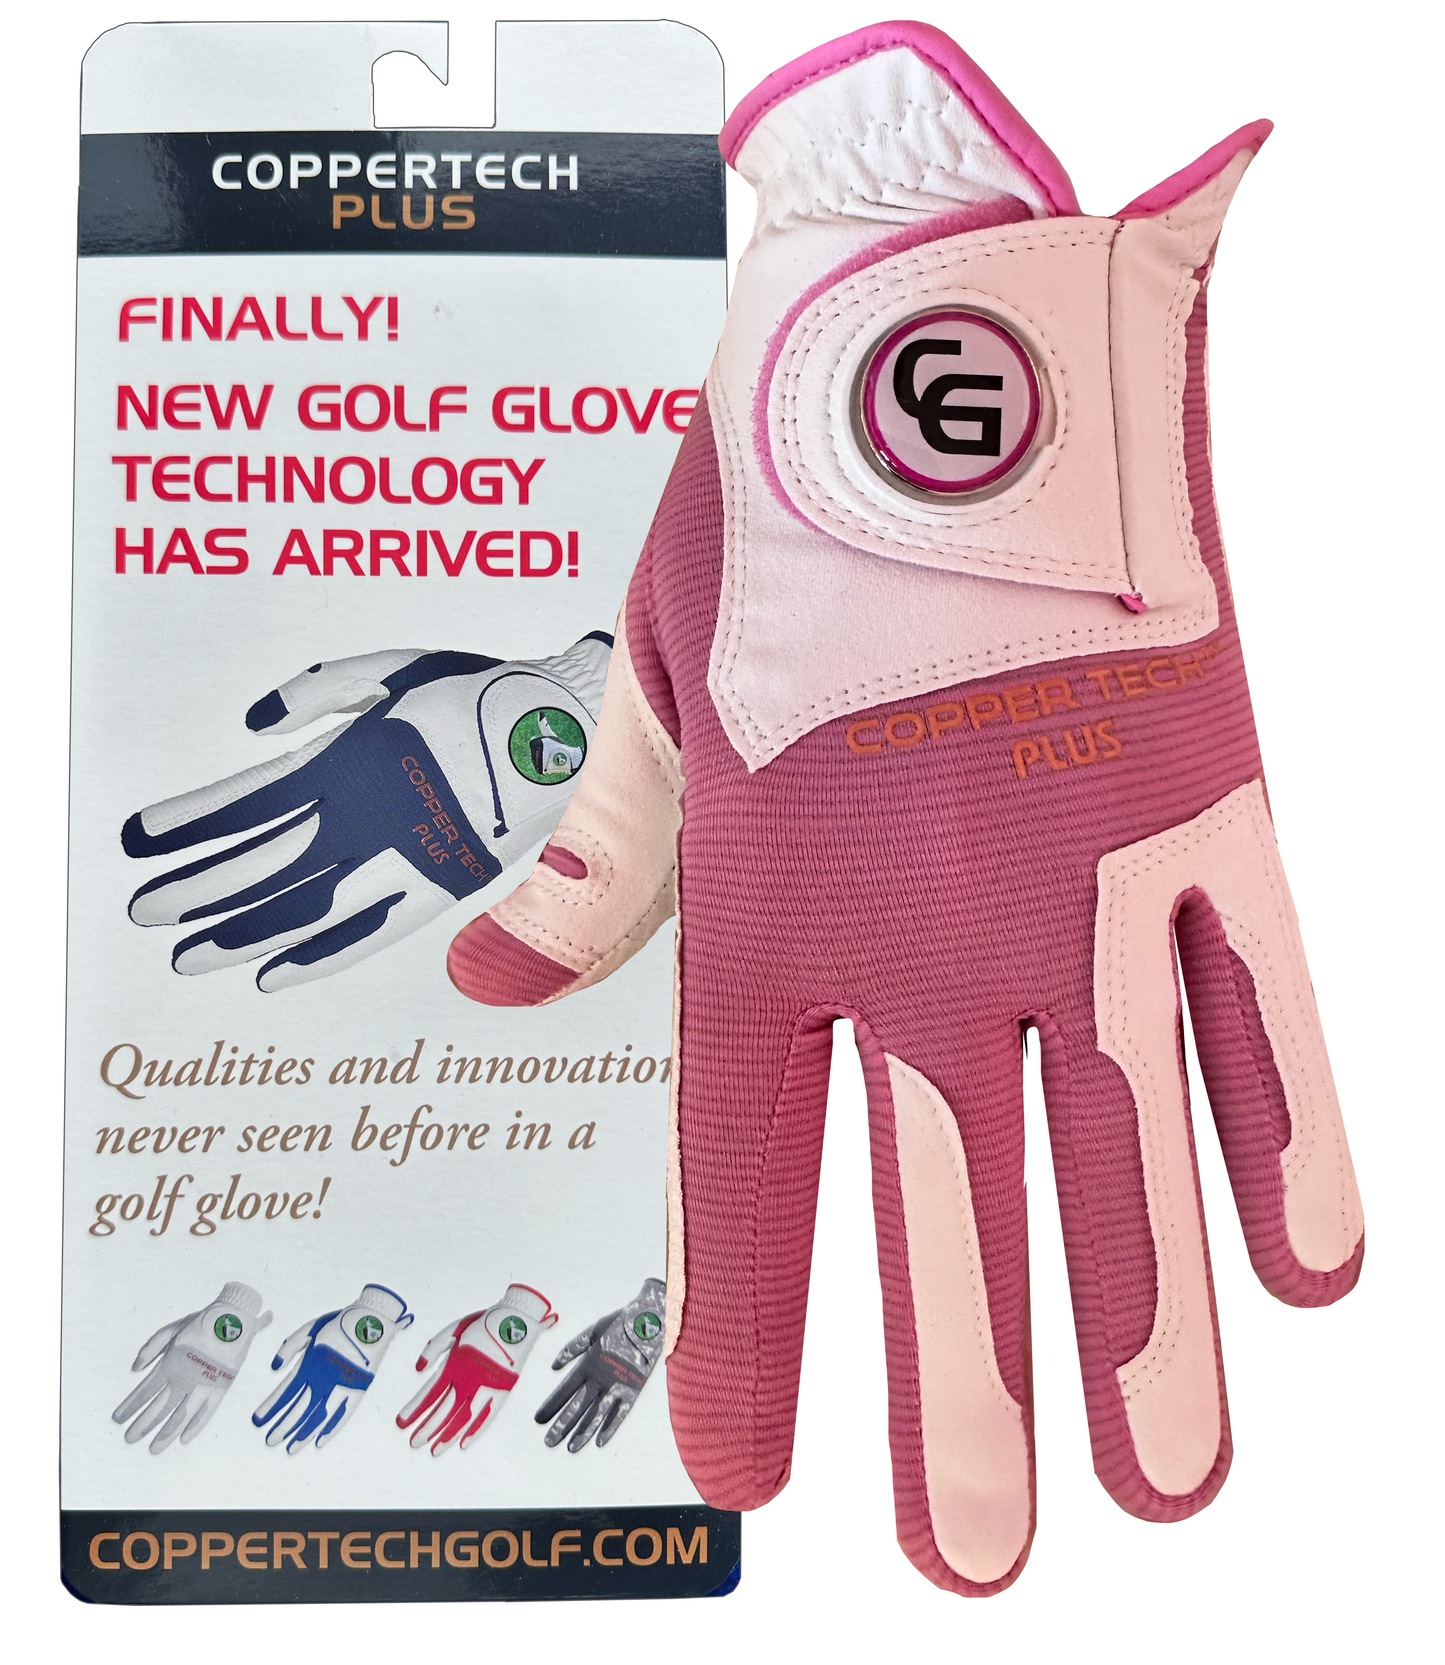 White/Pink Coppertech Plus Glove